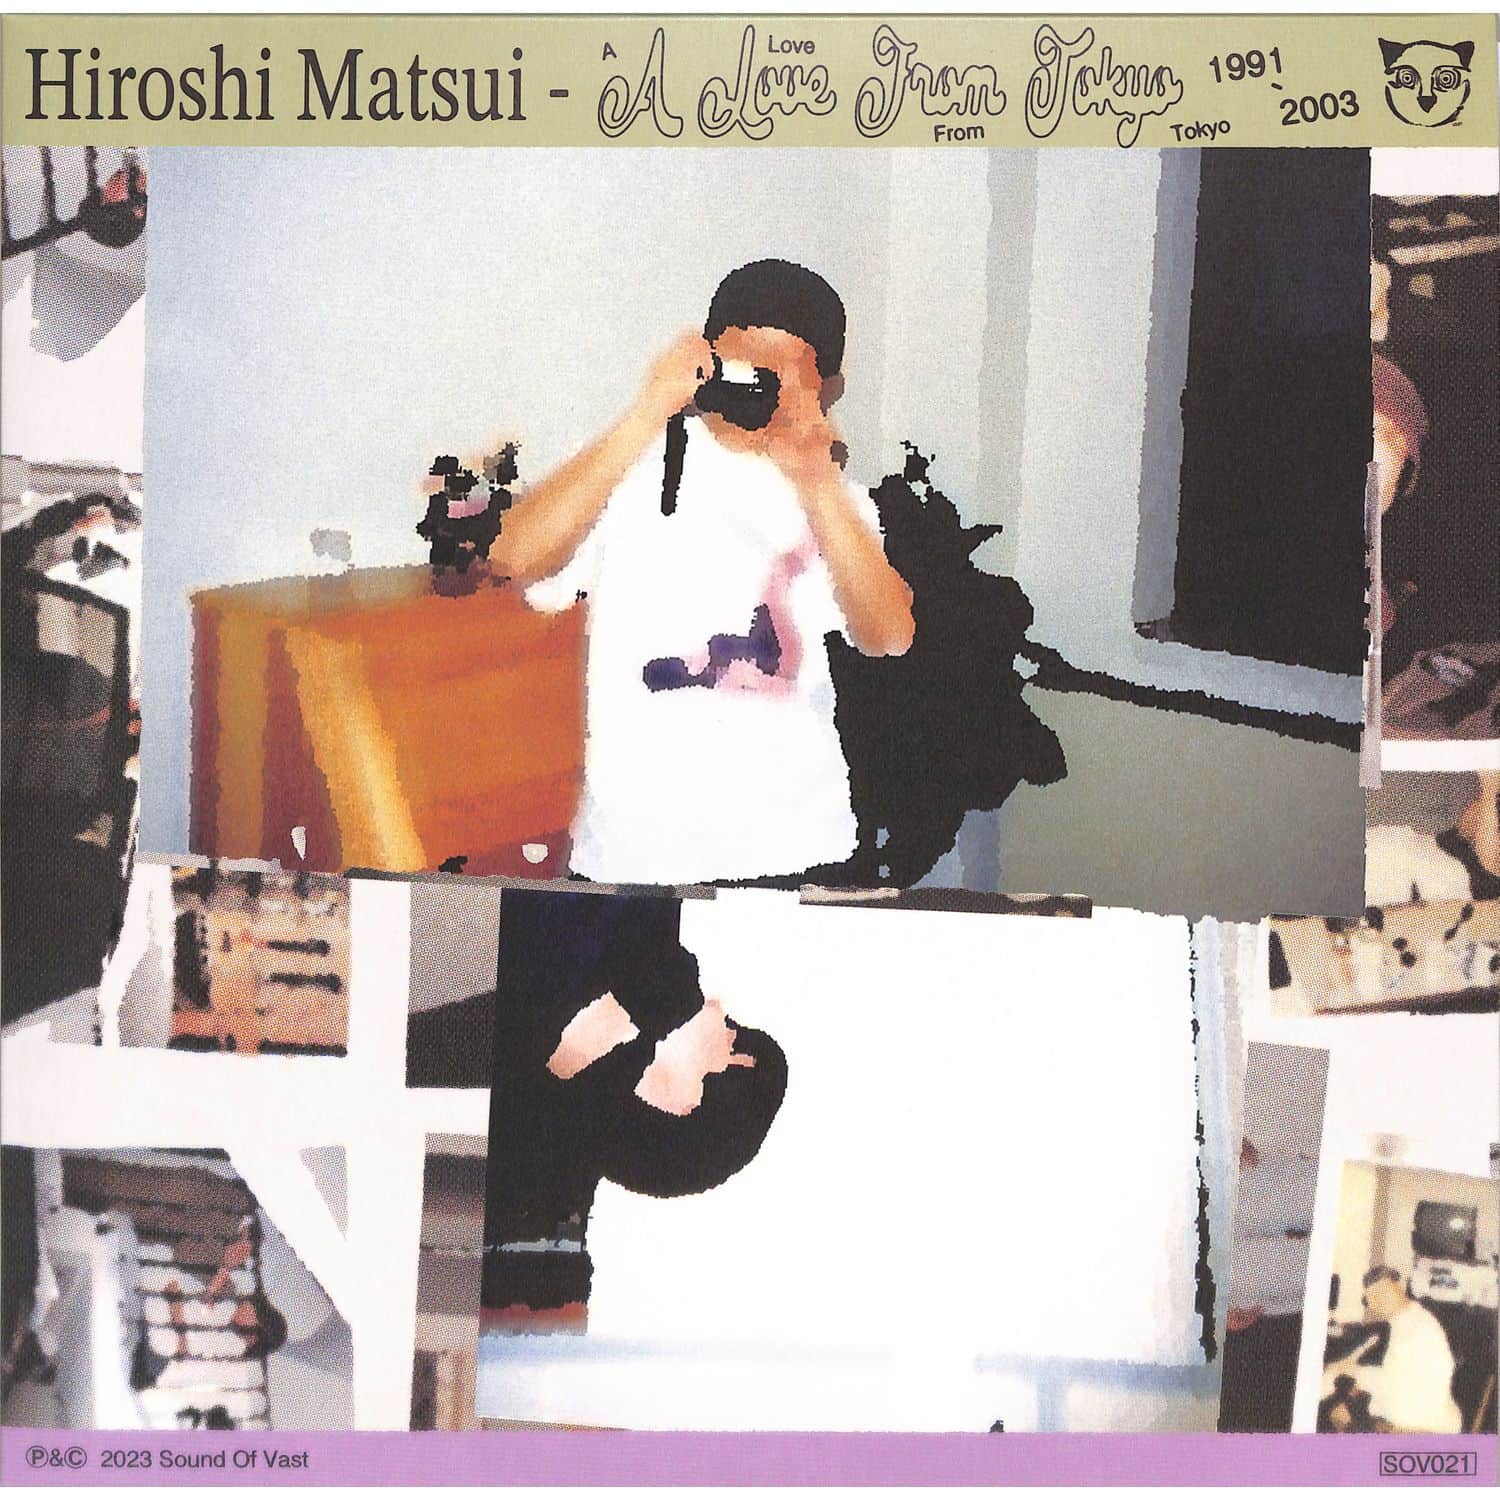 Hiroshi Matsui - A LOVE FROM TOKYO 1991 - 2003 